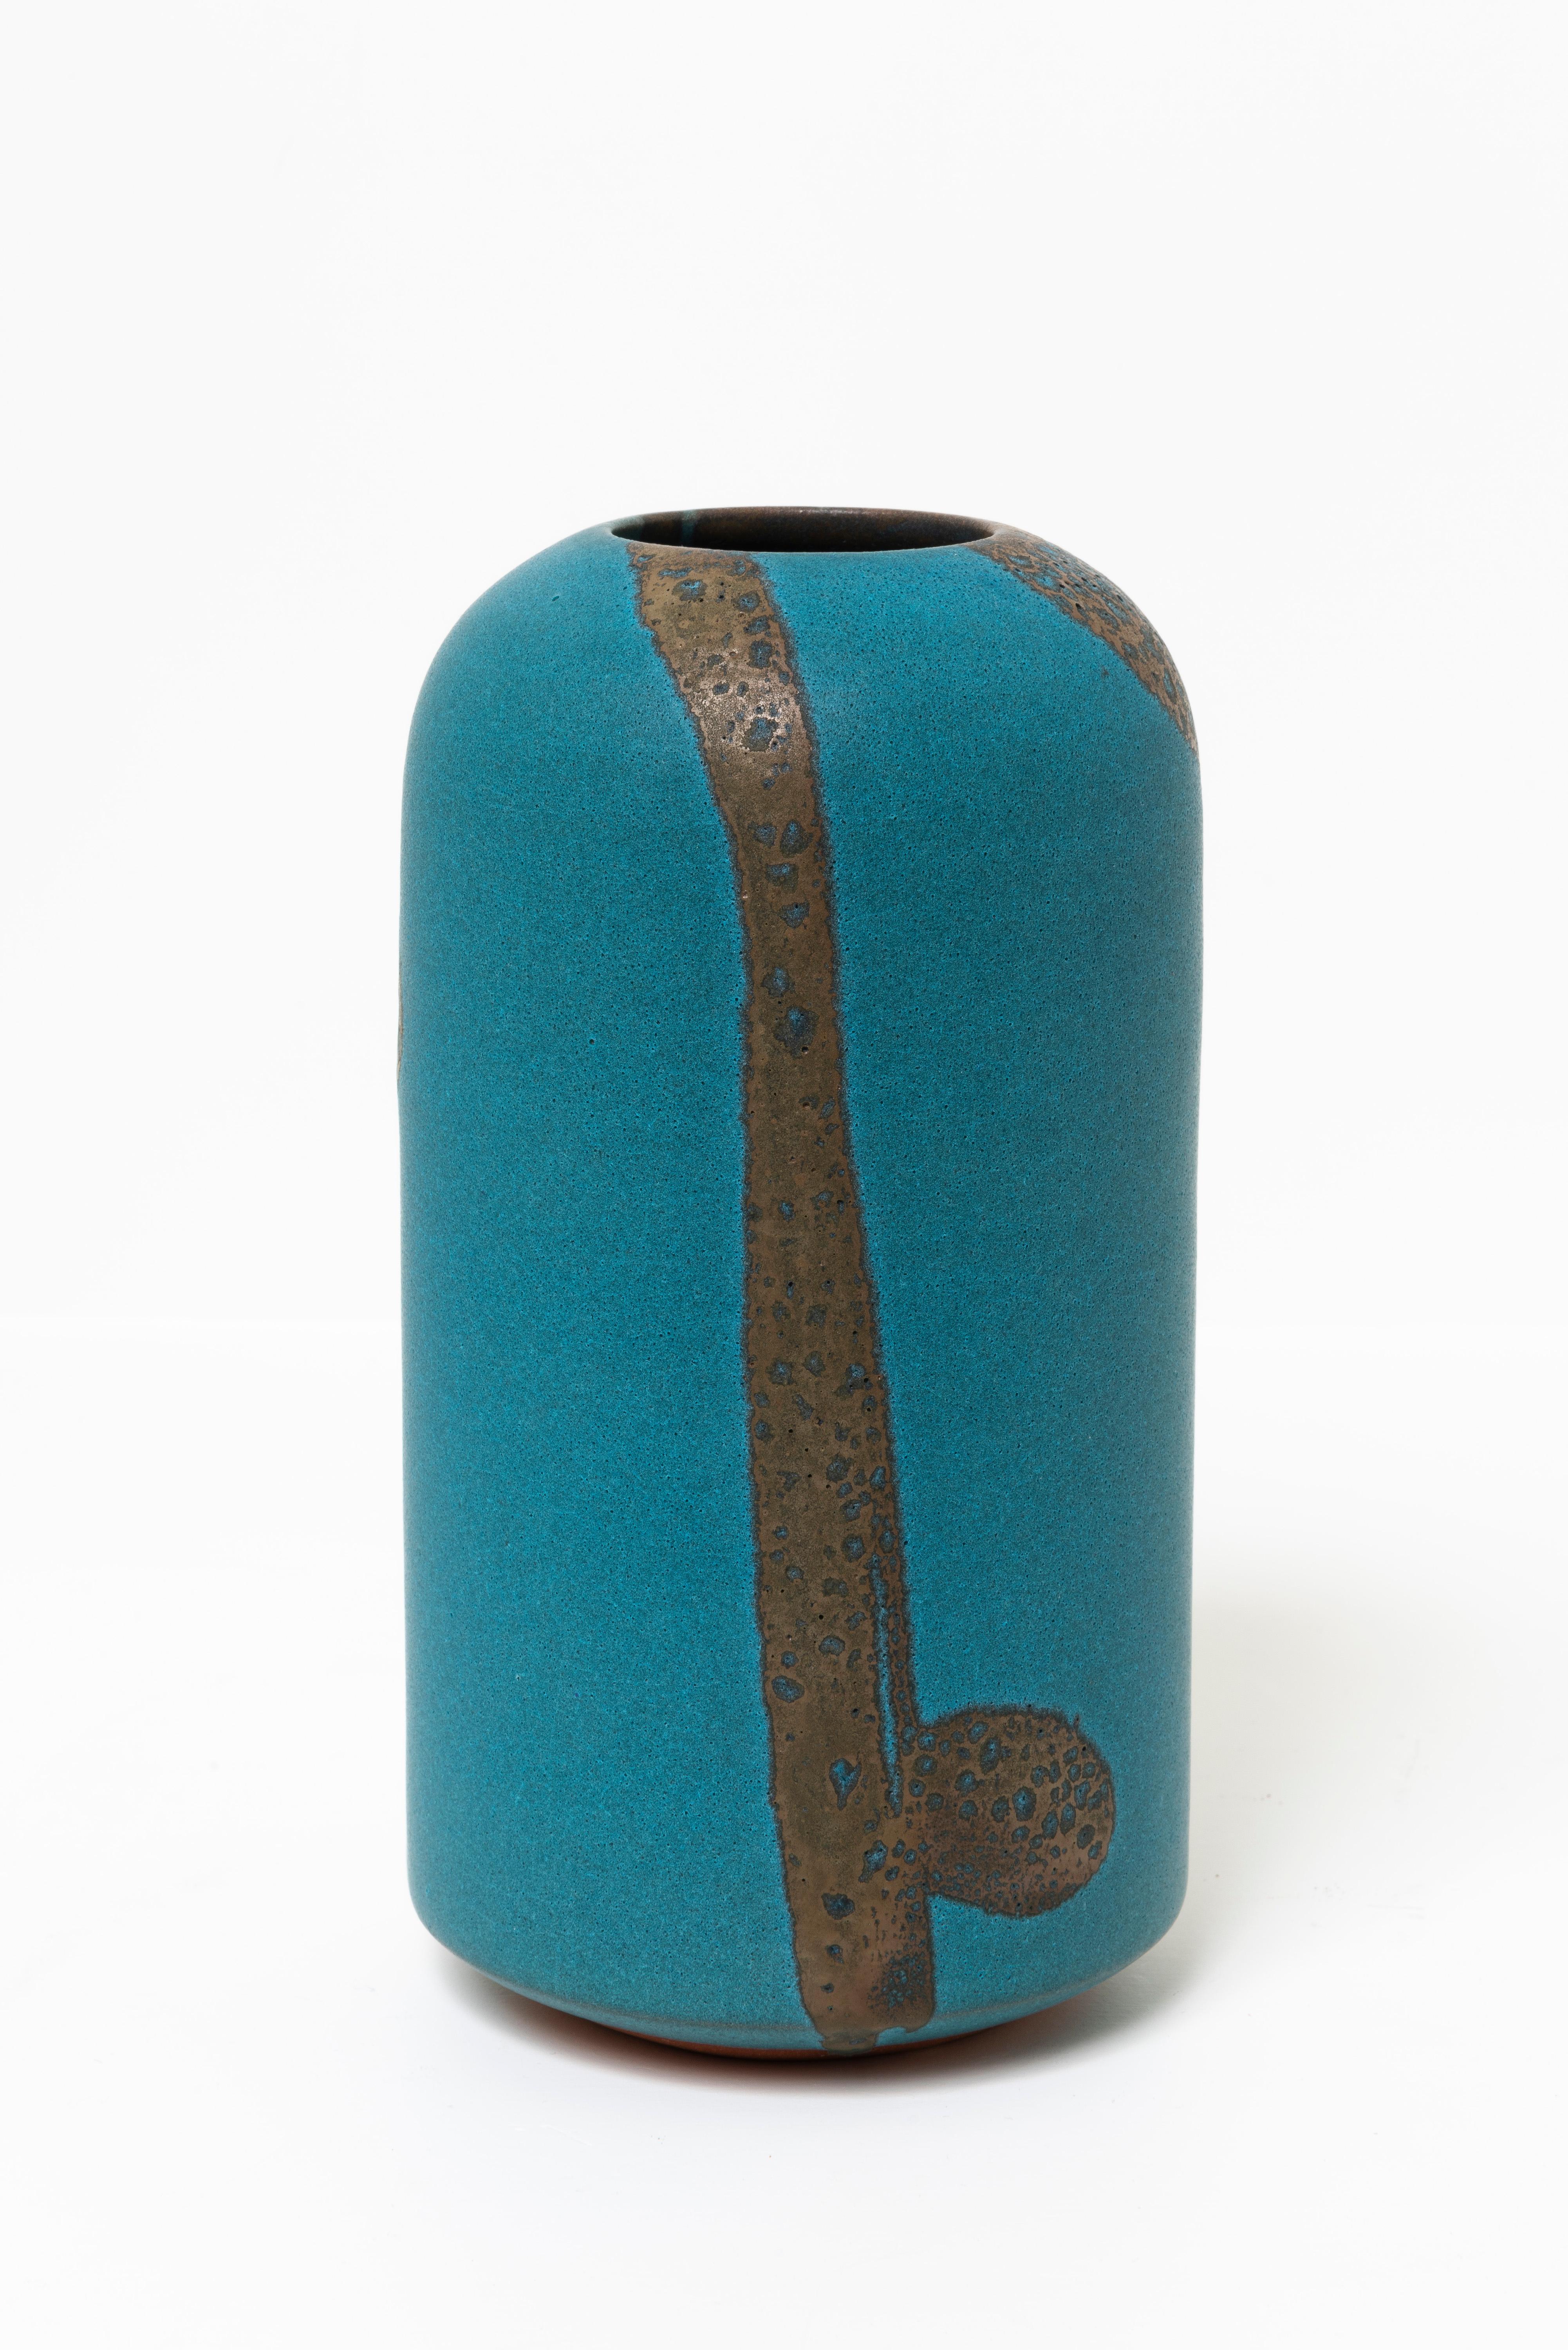 Japonisme Contemporary Japanese stoneware ceramic vase by Hiroaki Taimei Morino  For Sale